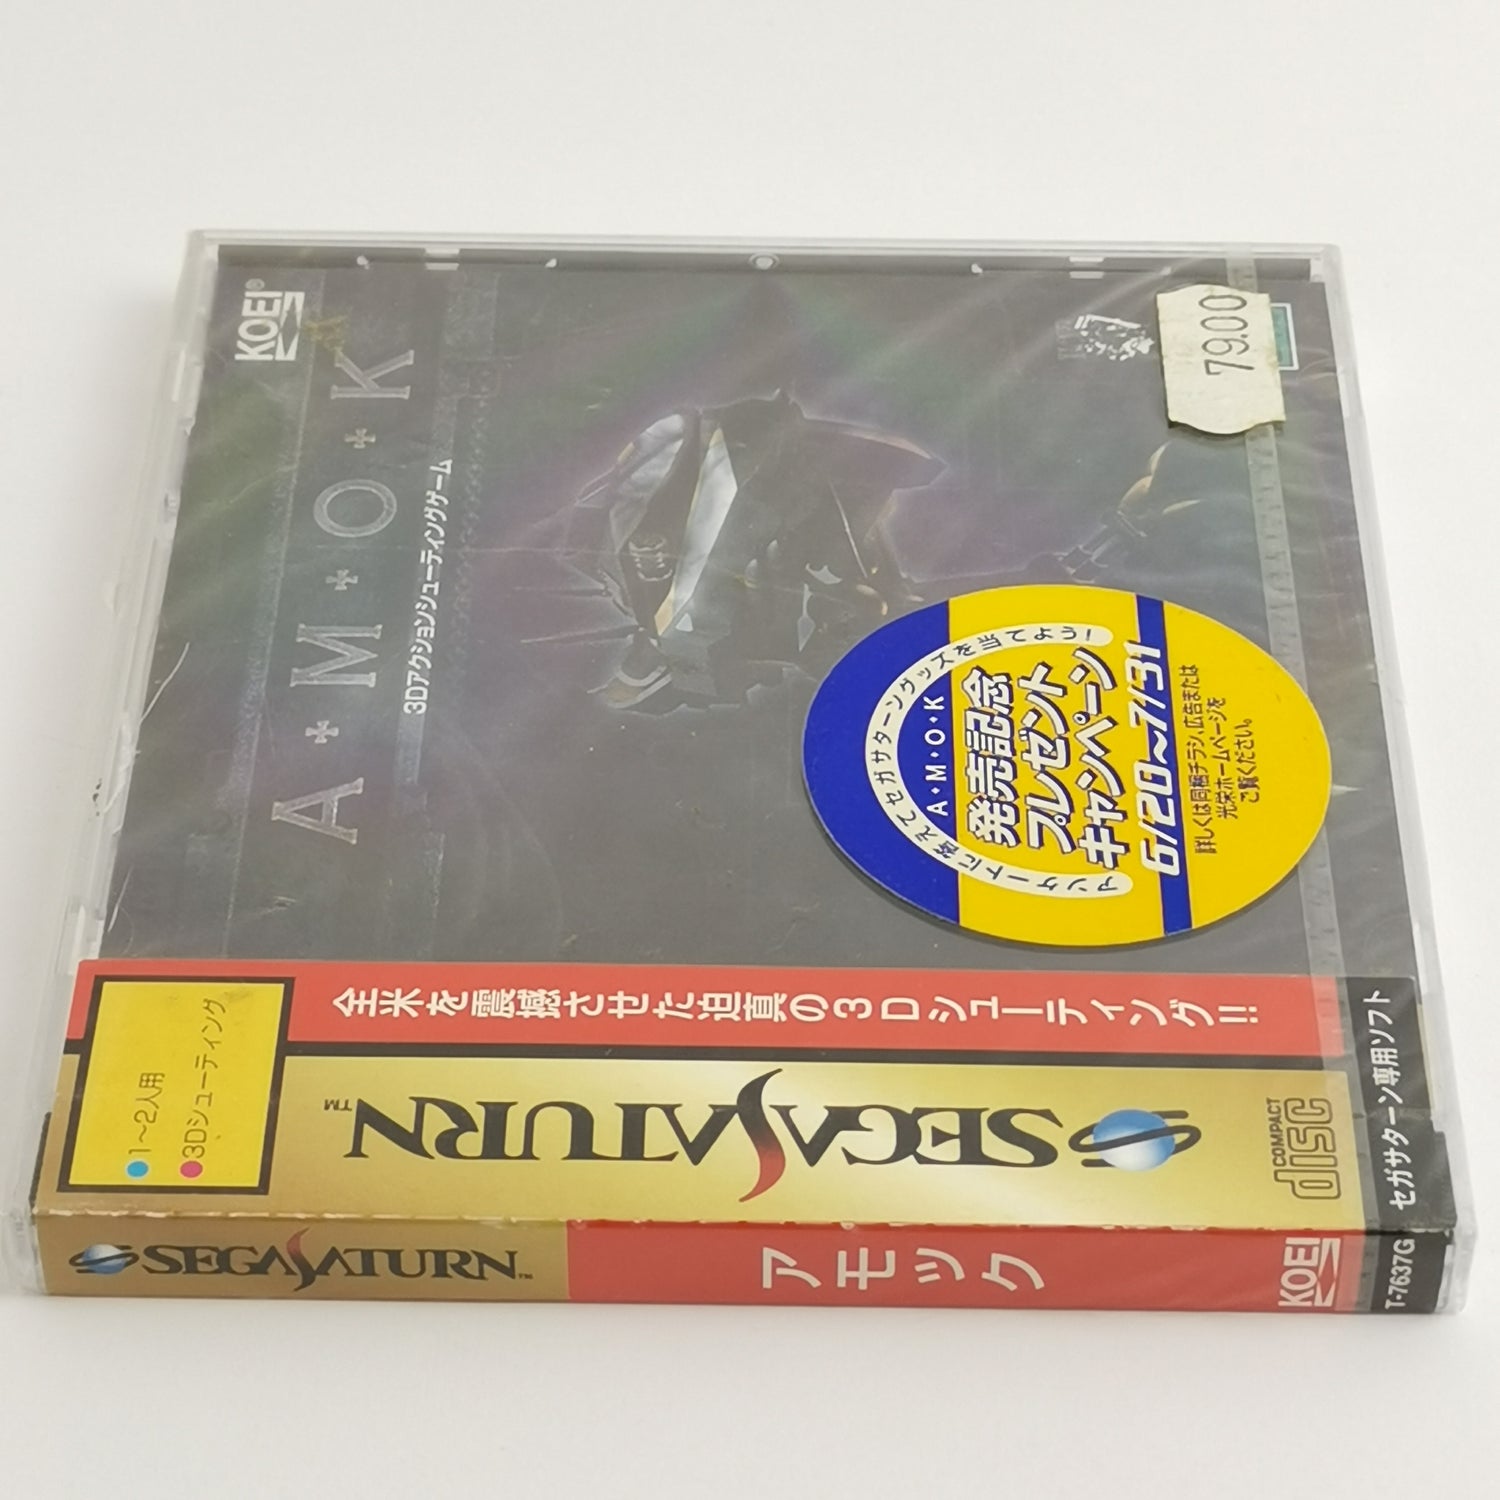 Japanese Sega Saturn game: AMOK - NEW SEALED | NTSC-J JAPAN - NEW ORIGINAL